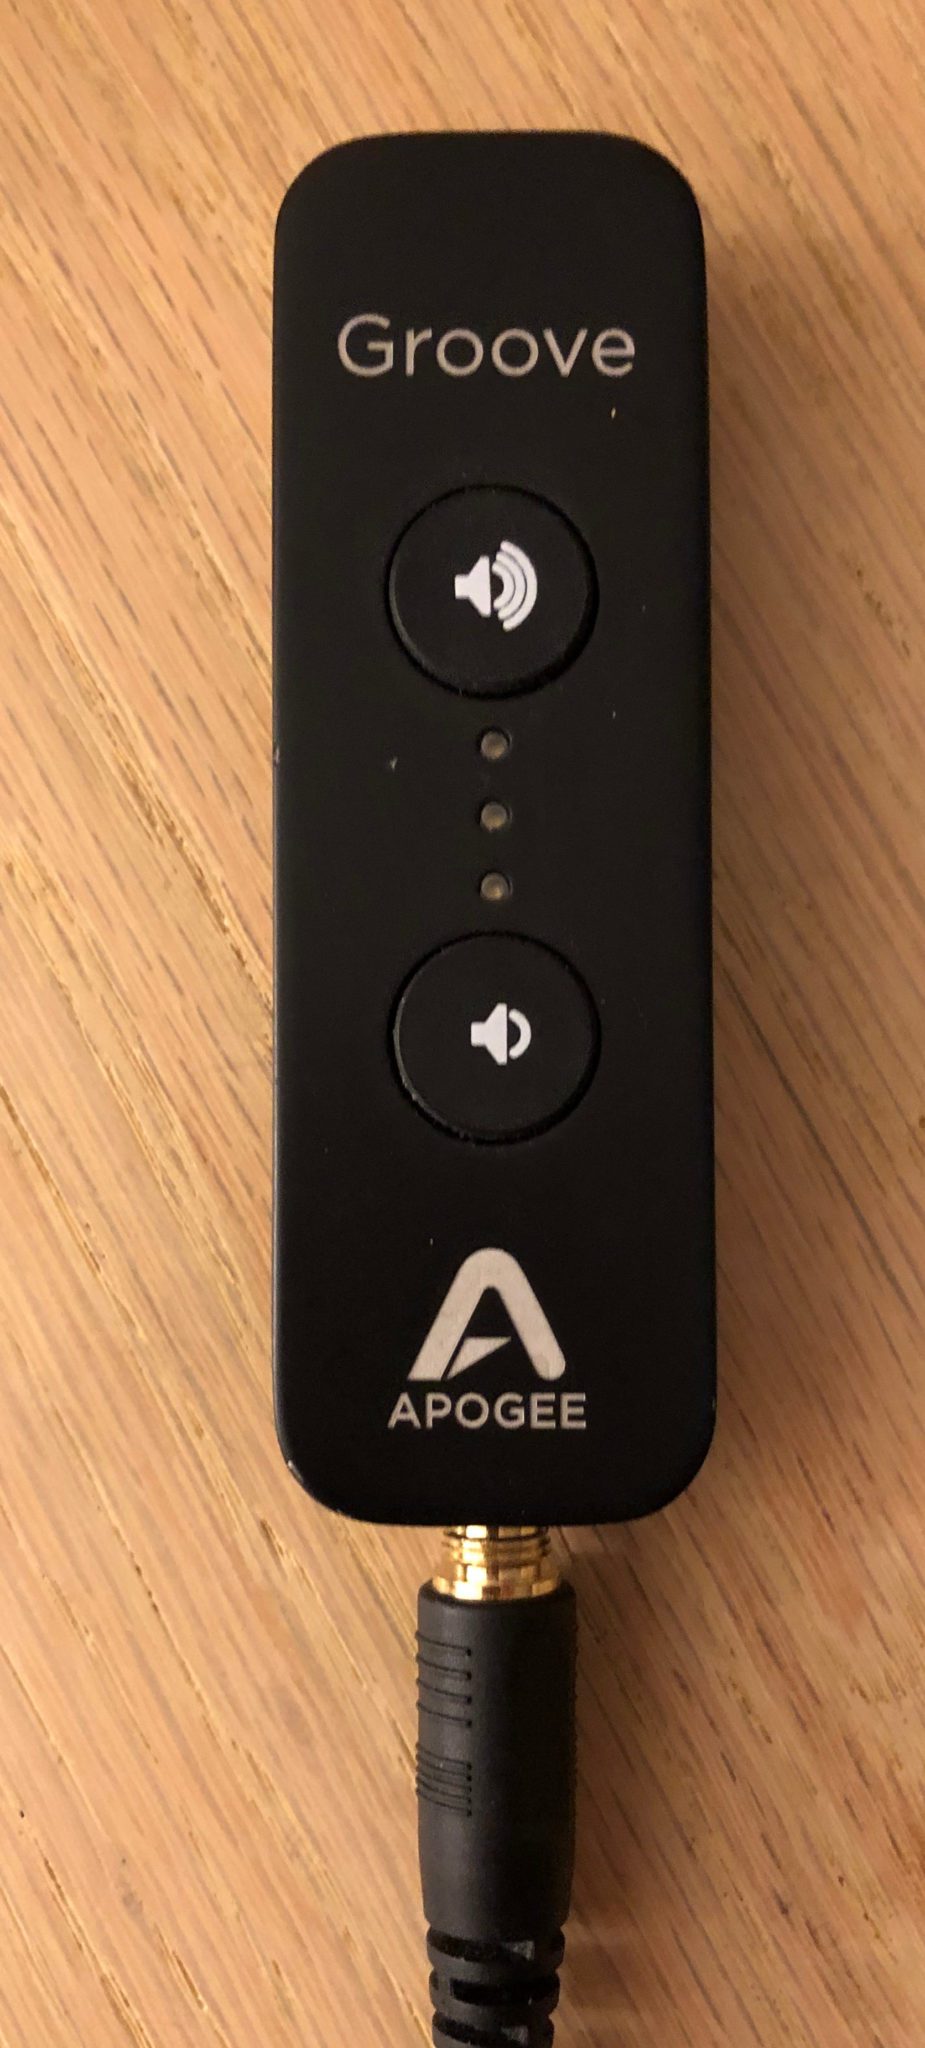 Apogee Groove | Audiofool Reviews